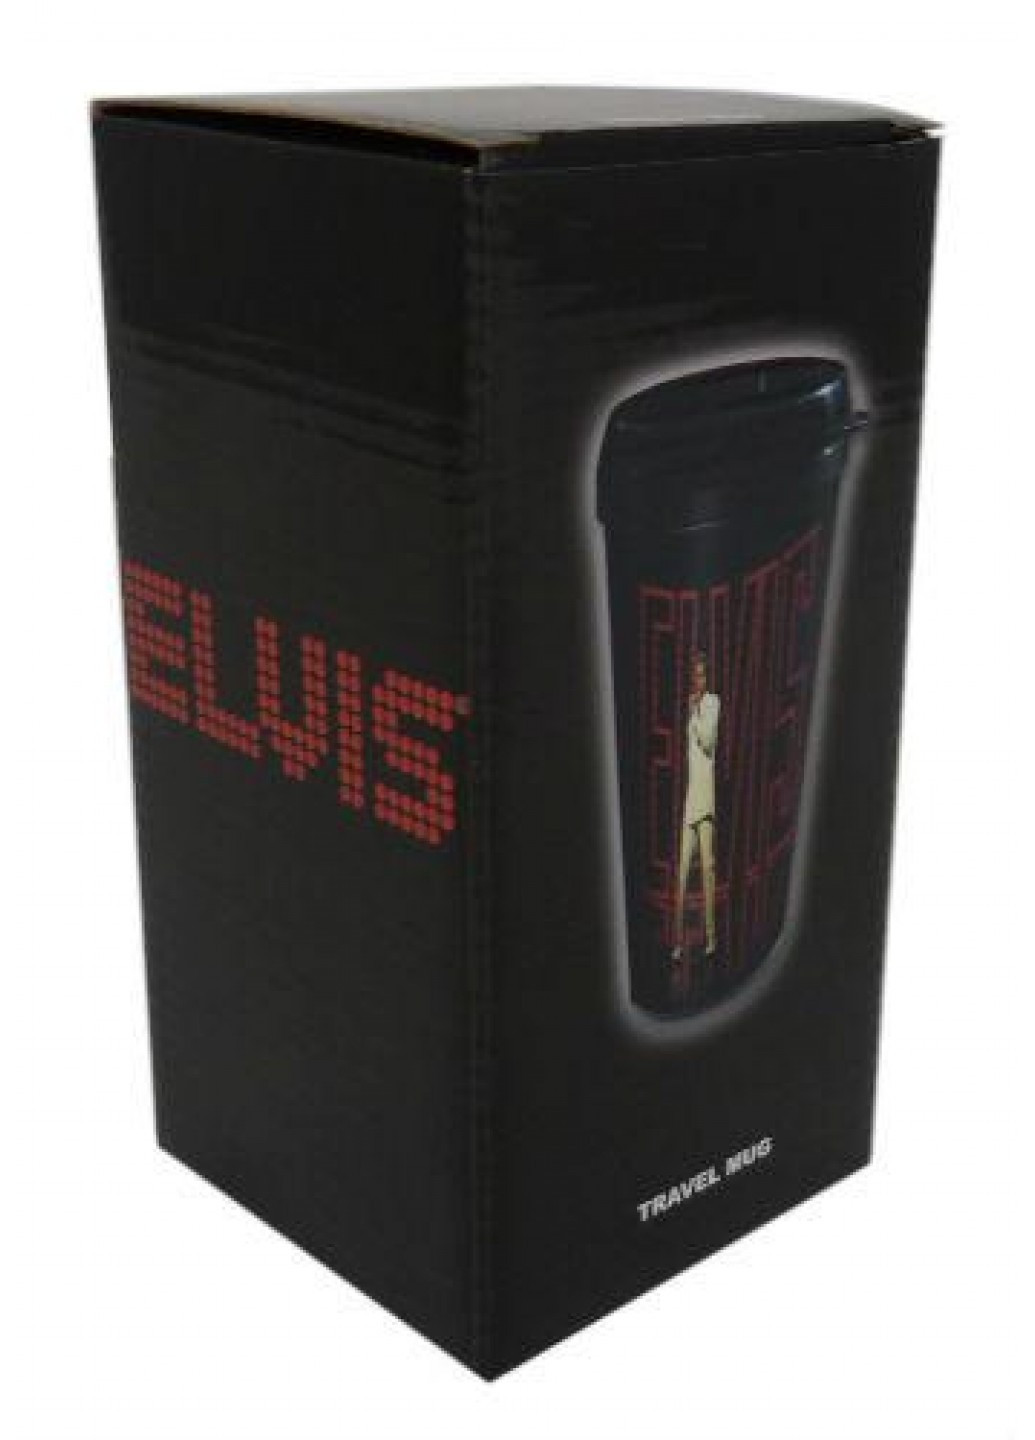 Кружка з кришкою "Elvis Travel Mug: In Lights" Rock Off eptravmug01 (207899551)